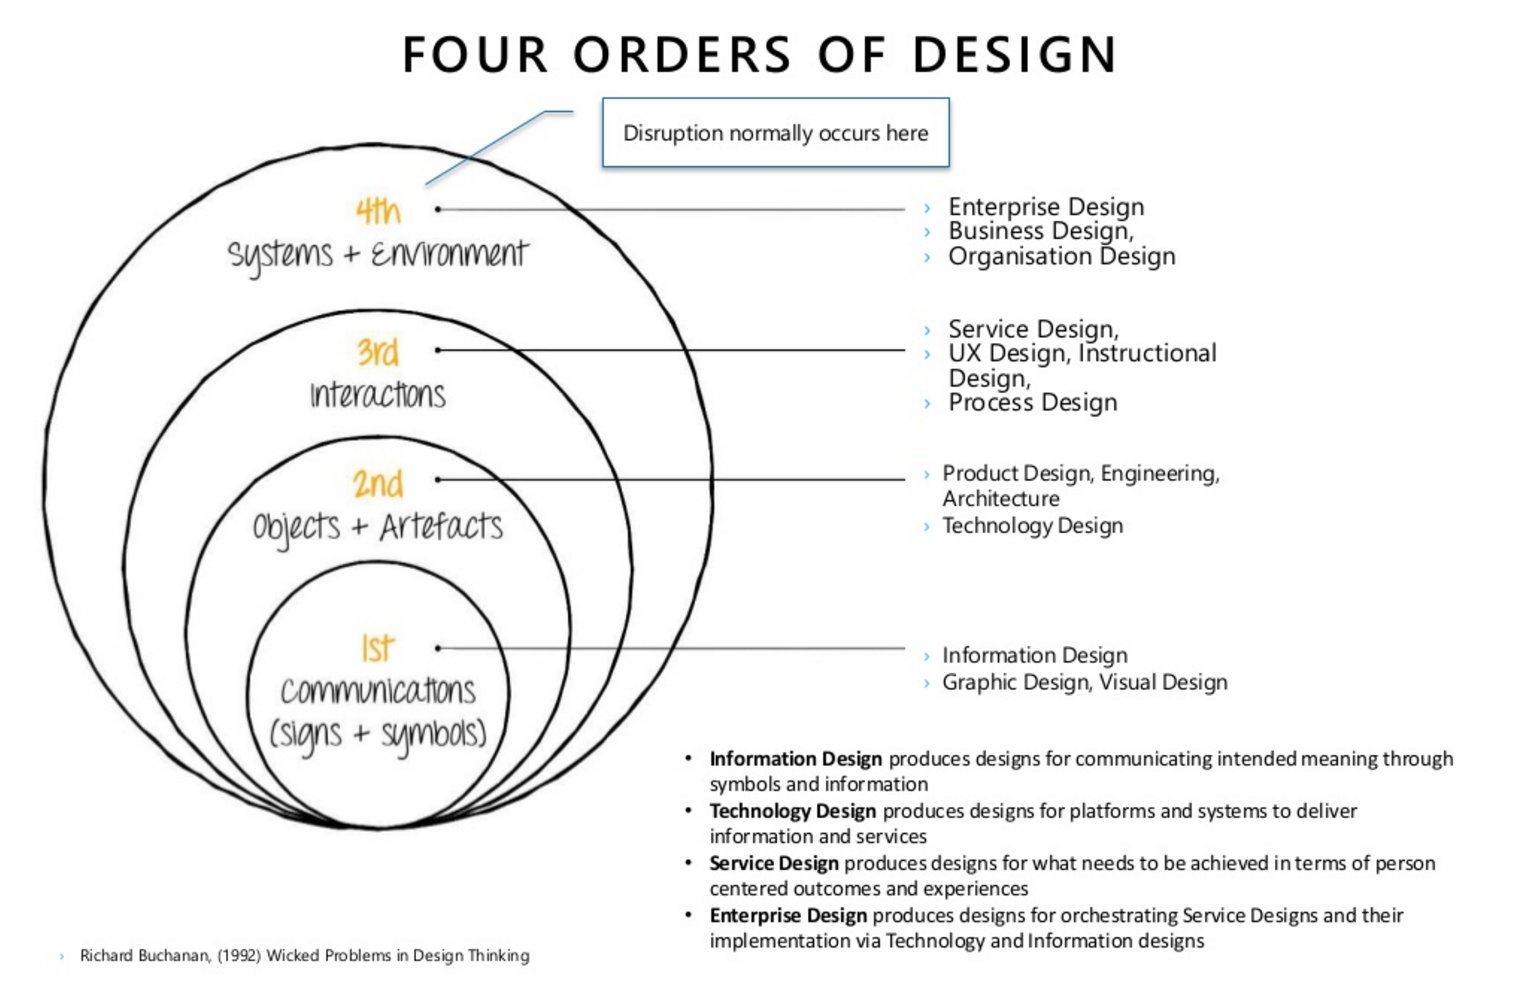 Mikael Seppälä on Twitter: "Richard Buchanan's 4 Orders of Design & Disciplines #servicedesign #entarch @enterprisearchs https://t.co/KQsoMUHYIq https://t.co/c1pzCZiLaU" / Twitter